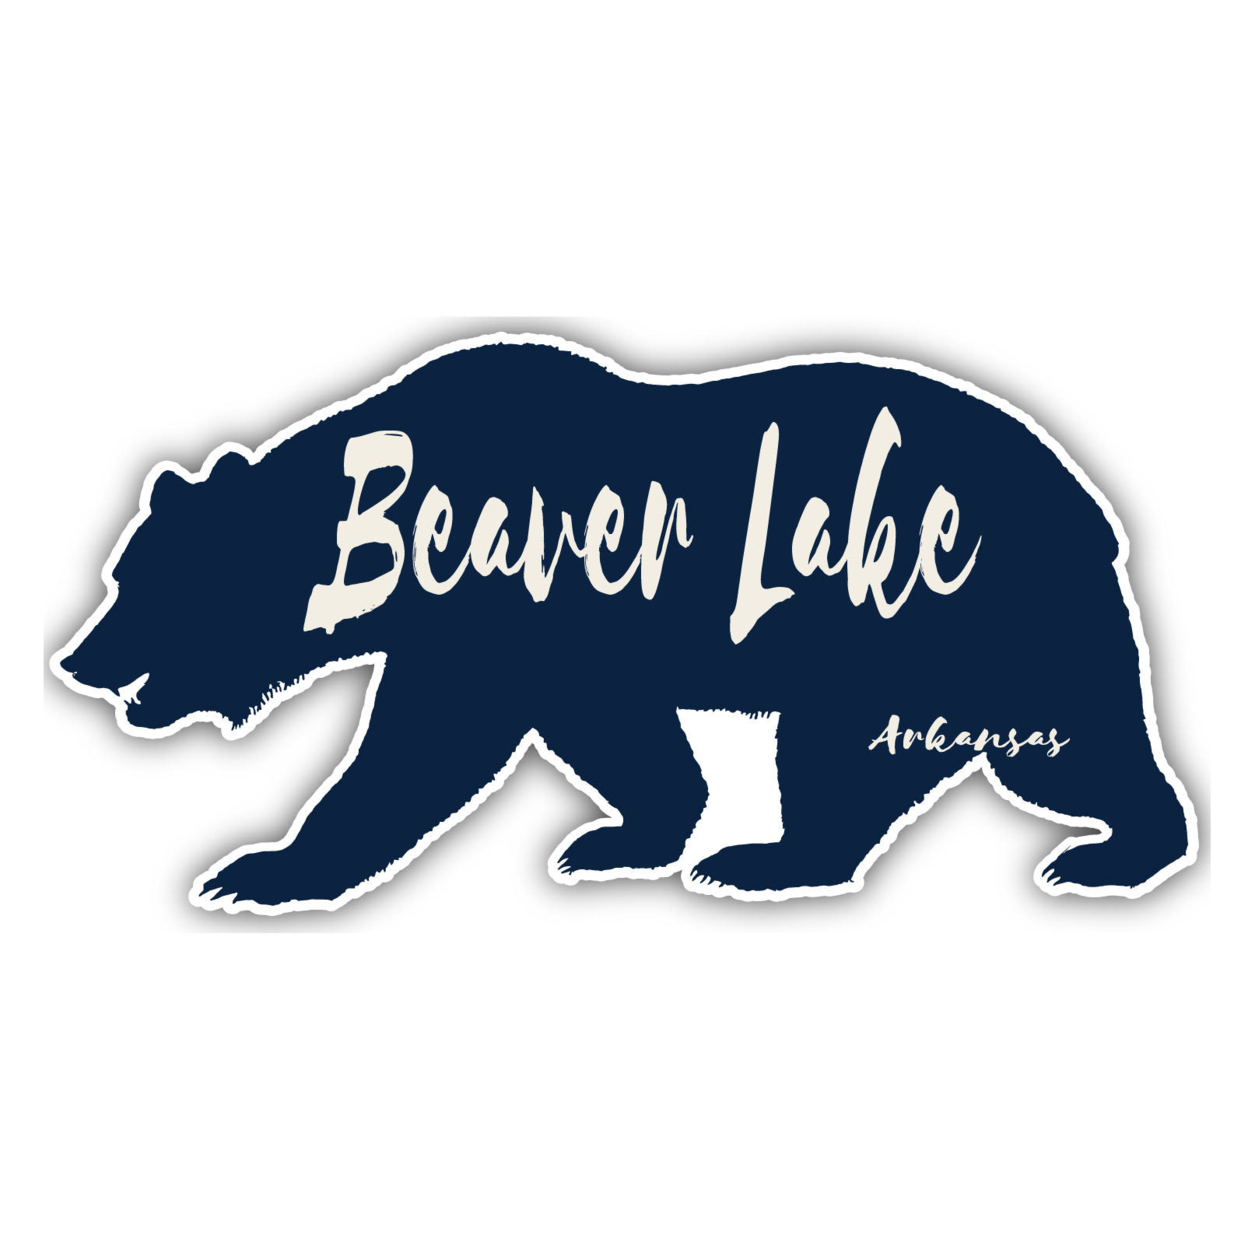 Beaver Lake Arkansas Souvenir Decorative Stickers (Choose Theme And Size) - Single Unit, 6-Inch, Adventures Awaits